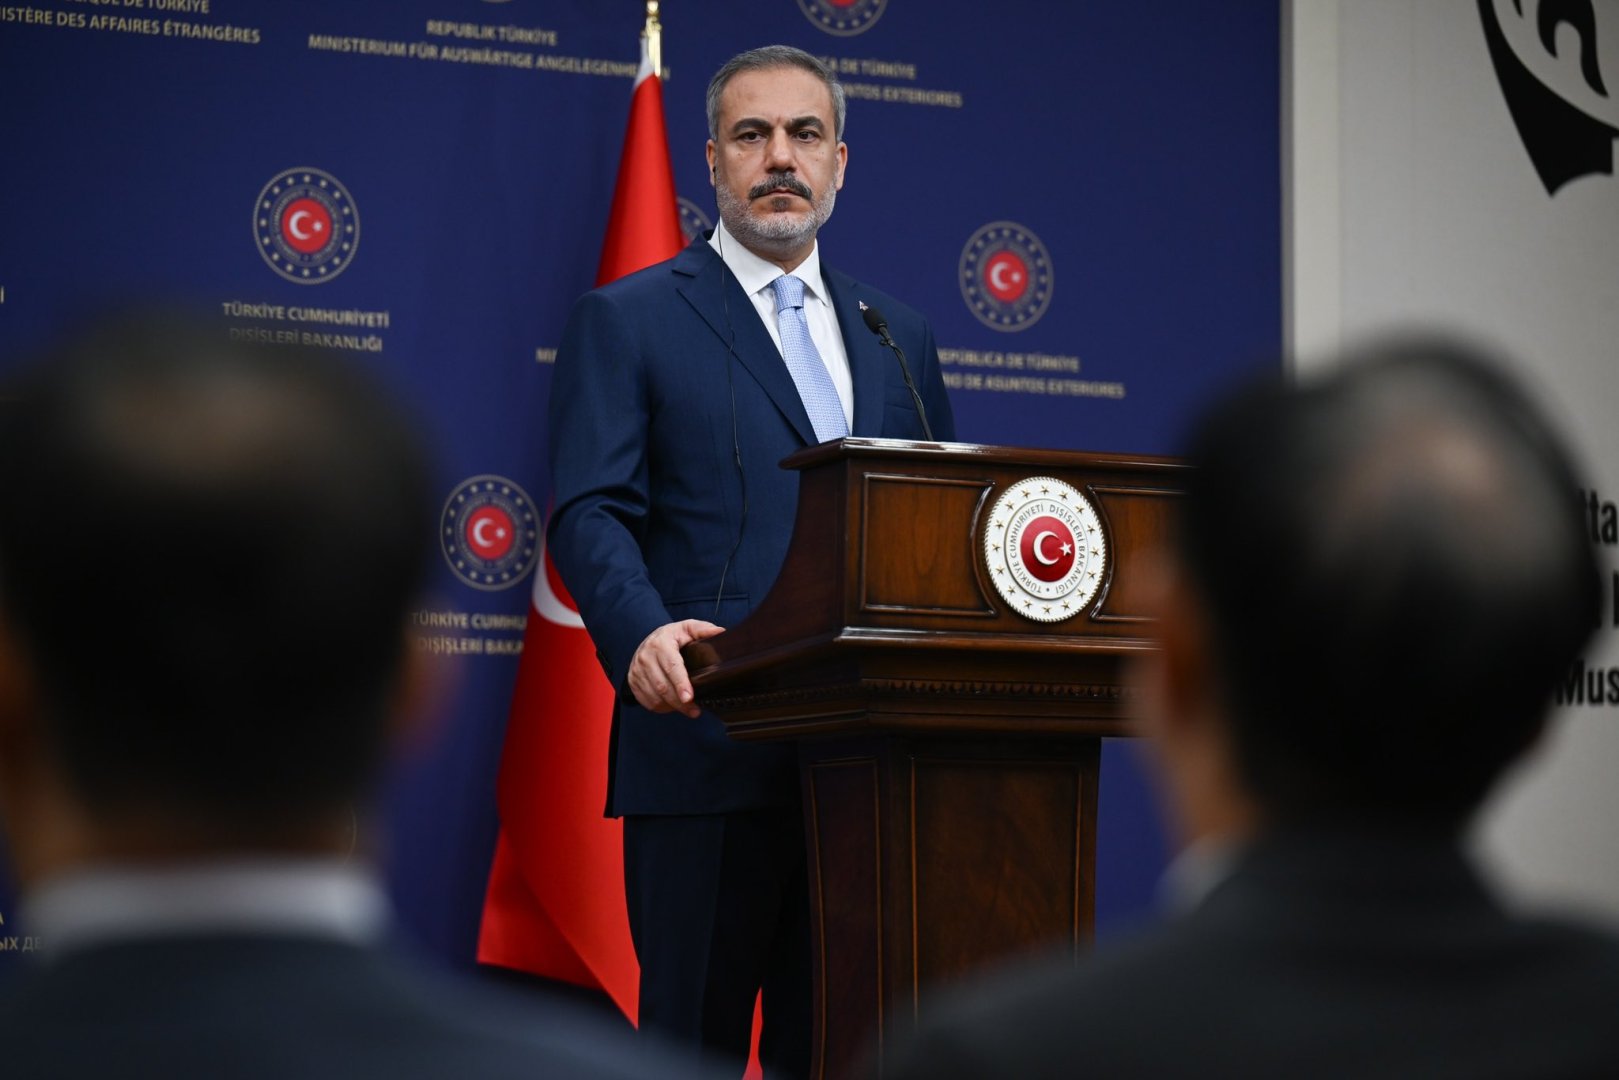 Türkiye wants Iraq to designate the PKK as a terrorist organization - Turkish FM